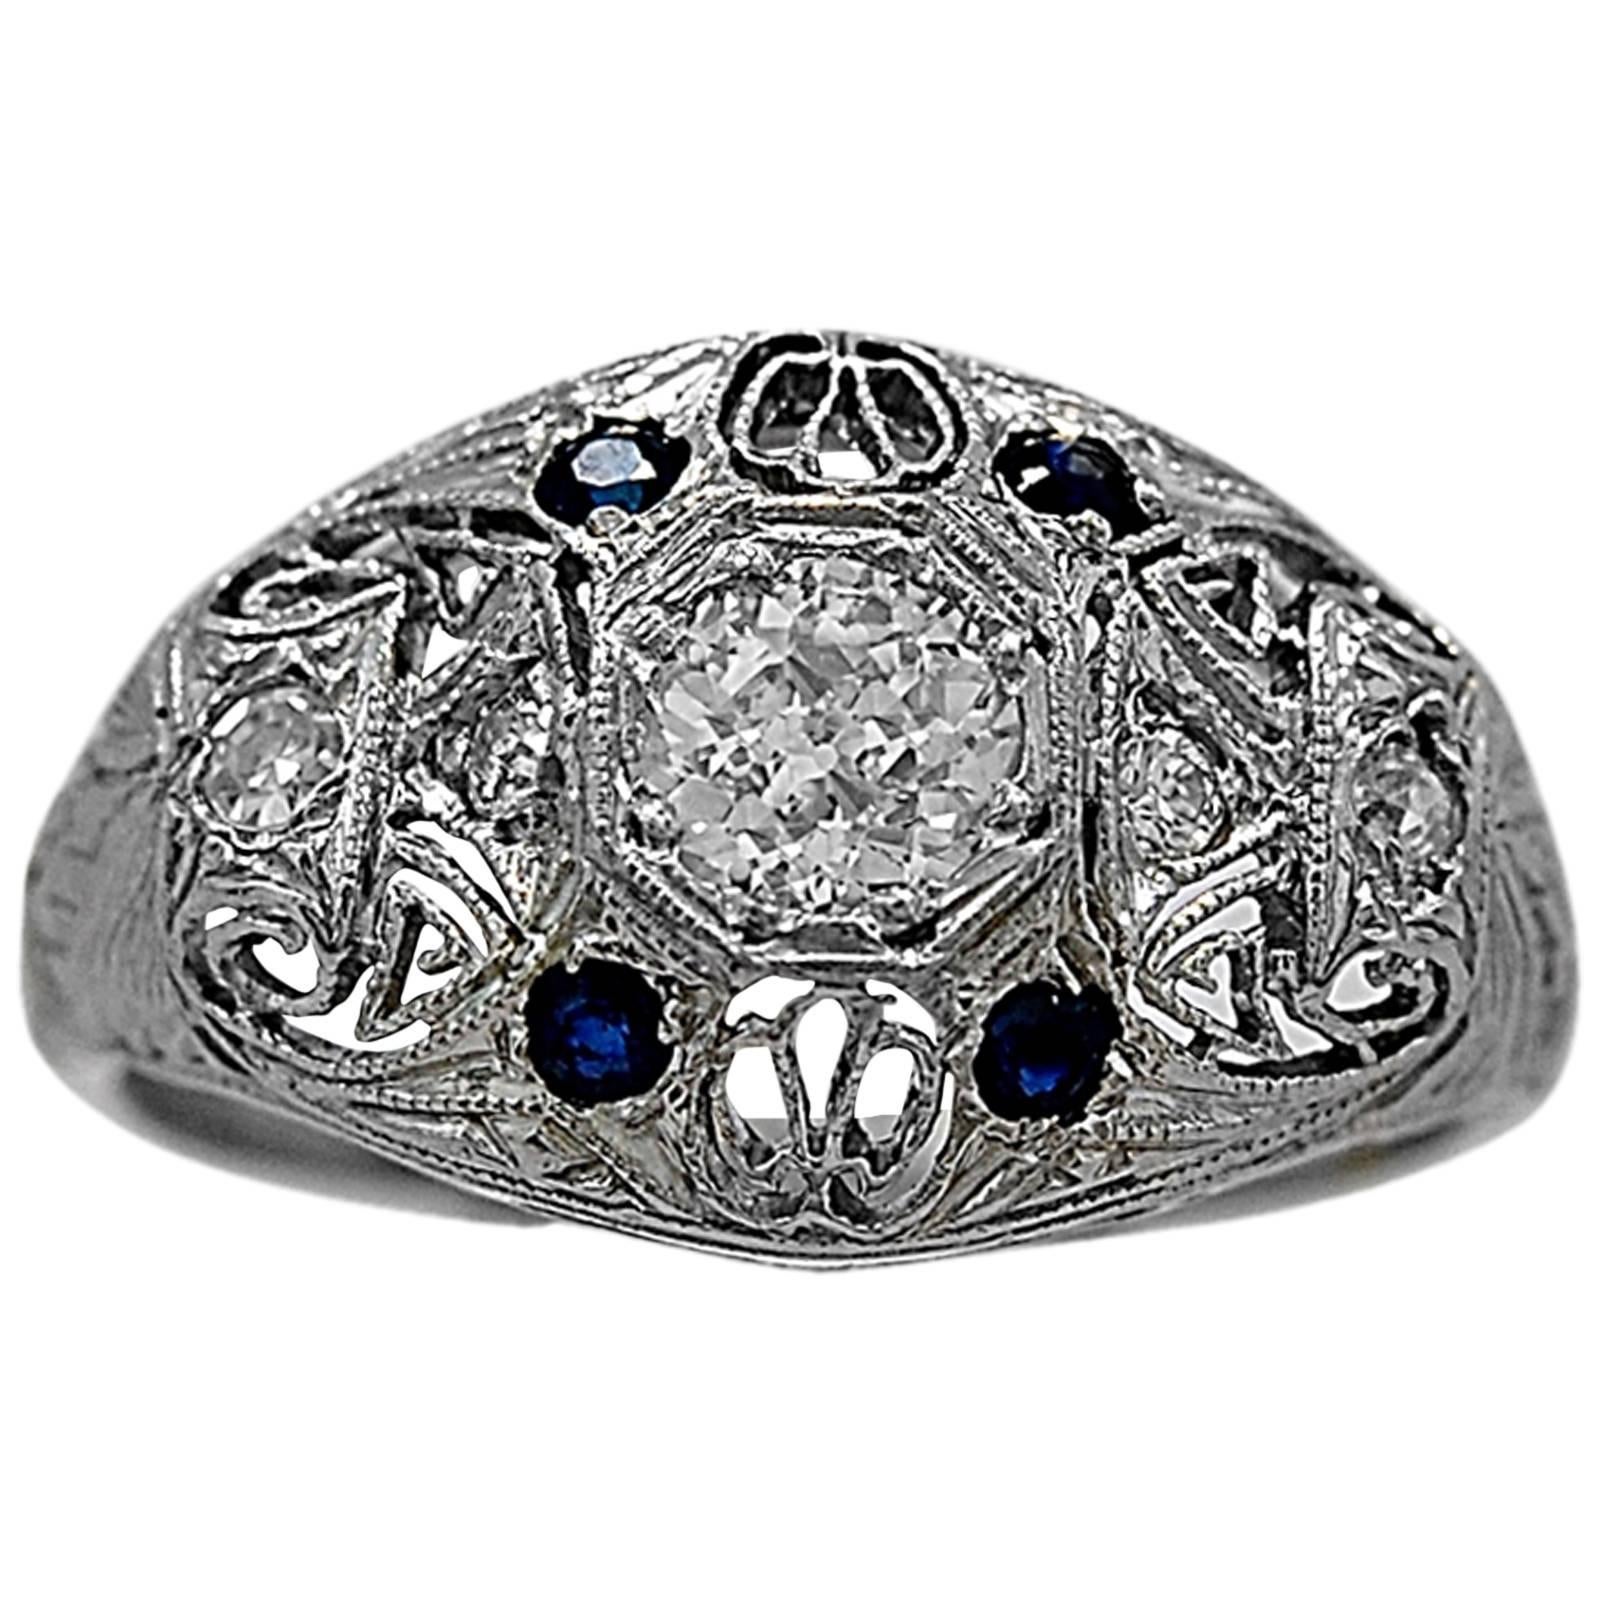 Art Deco .30 Carat Diamond Sapphire Platinum Engagement Ring